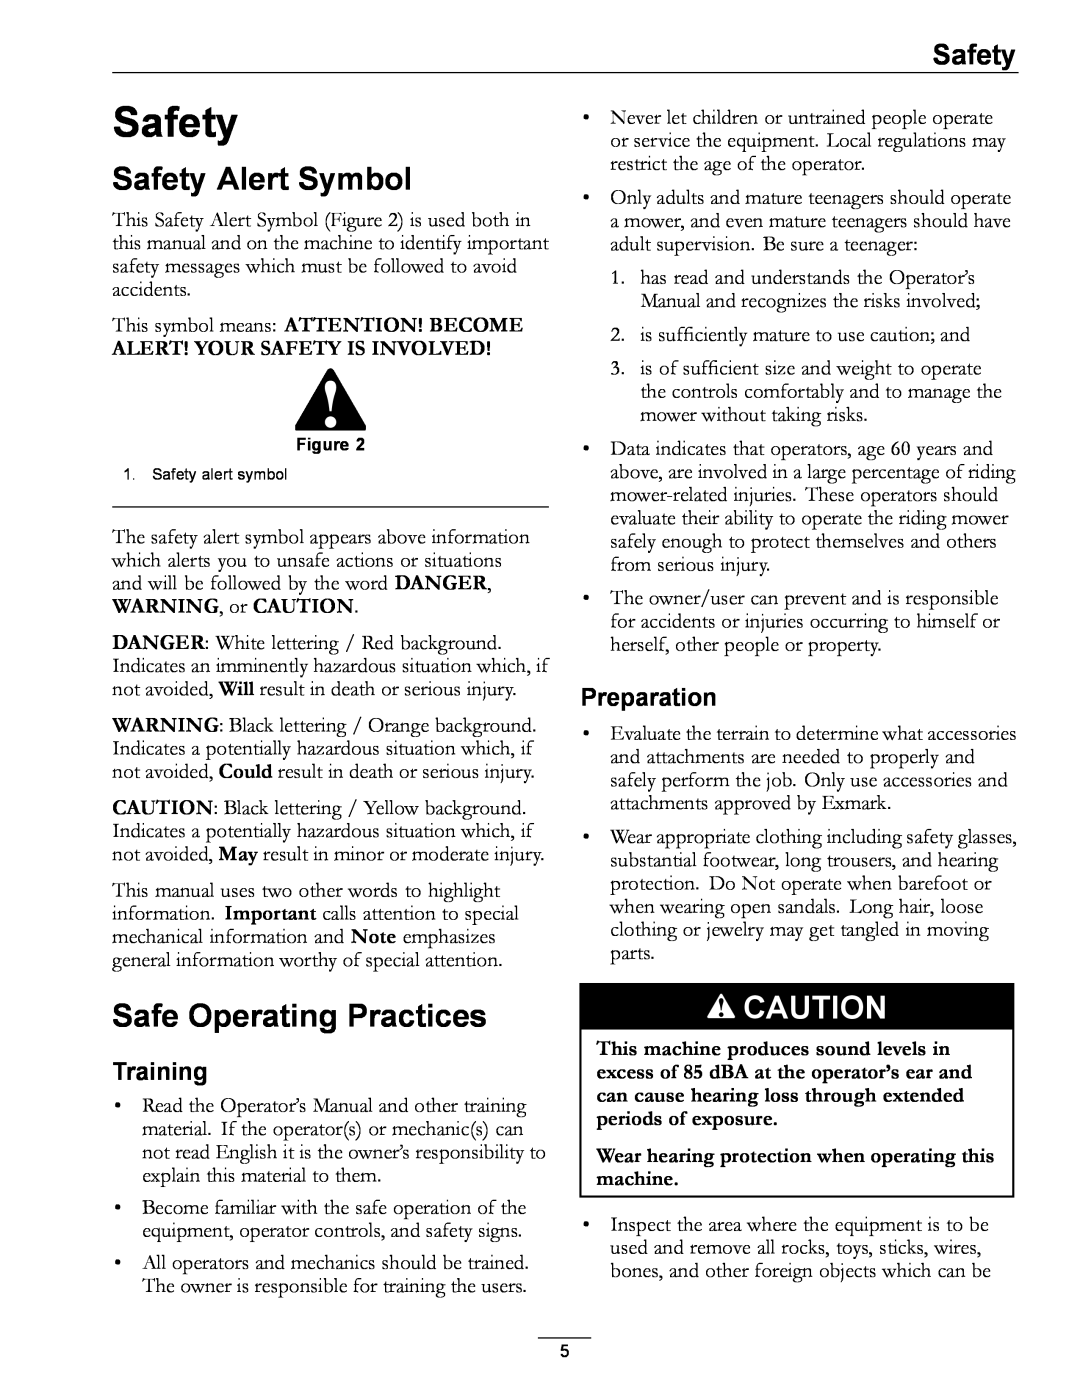 Exmark 00 & Higher, 850 manual Safety Alert Symbol, Safe Operating Practices, Preparation, Training 